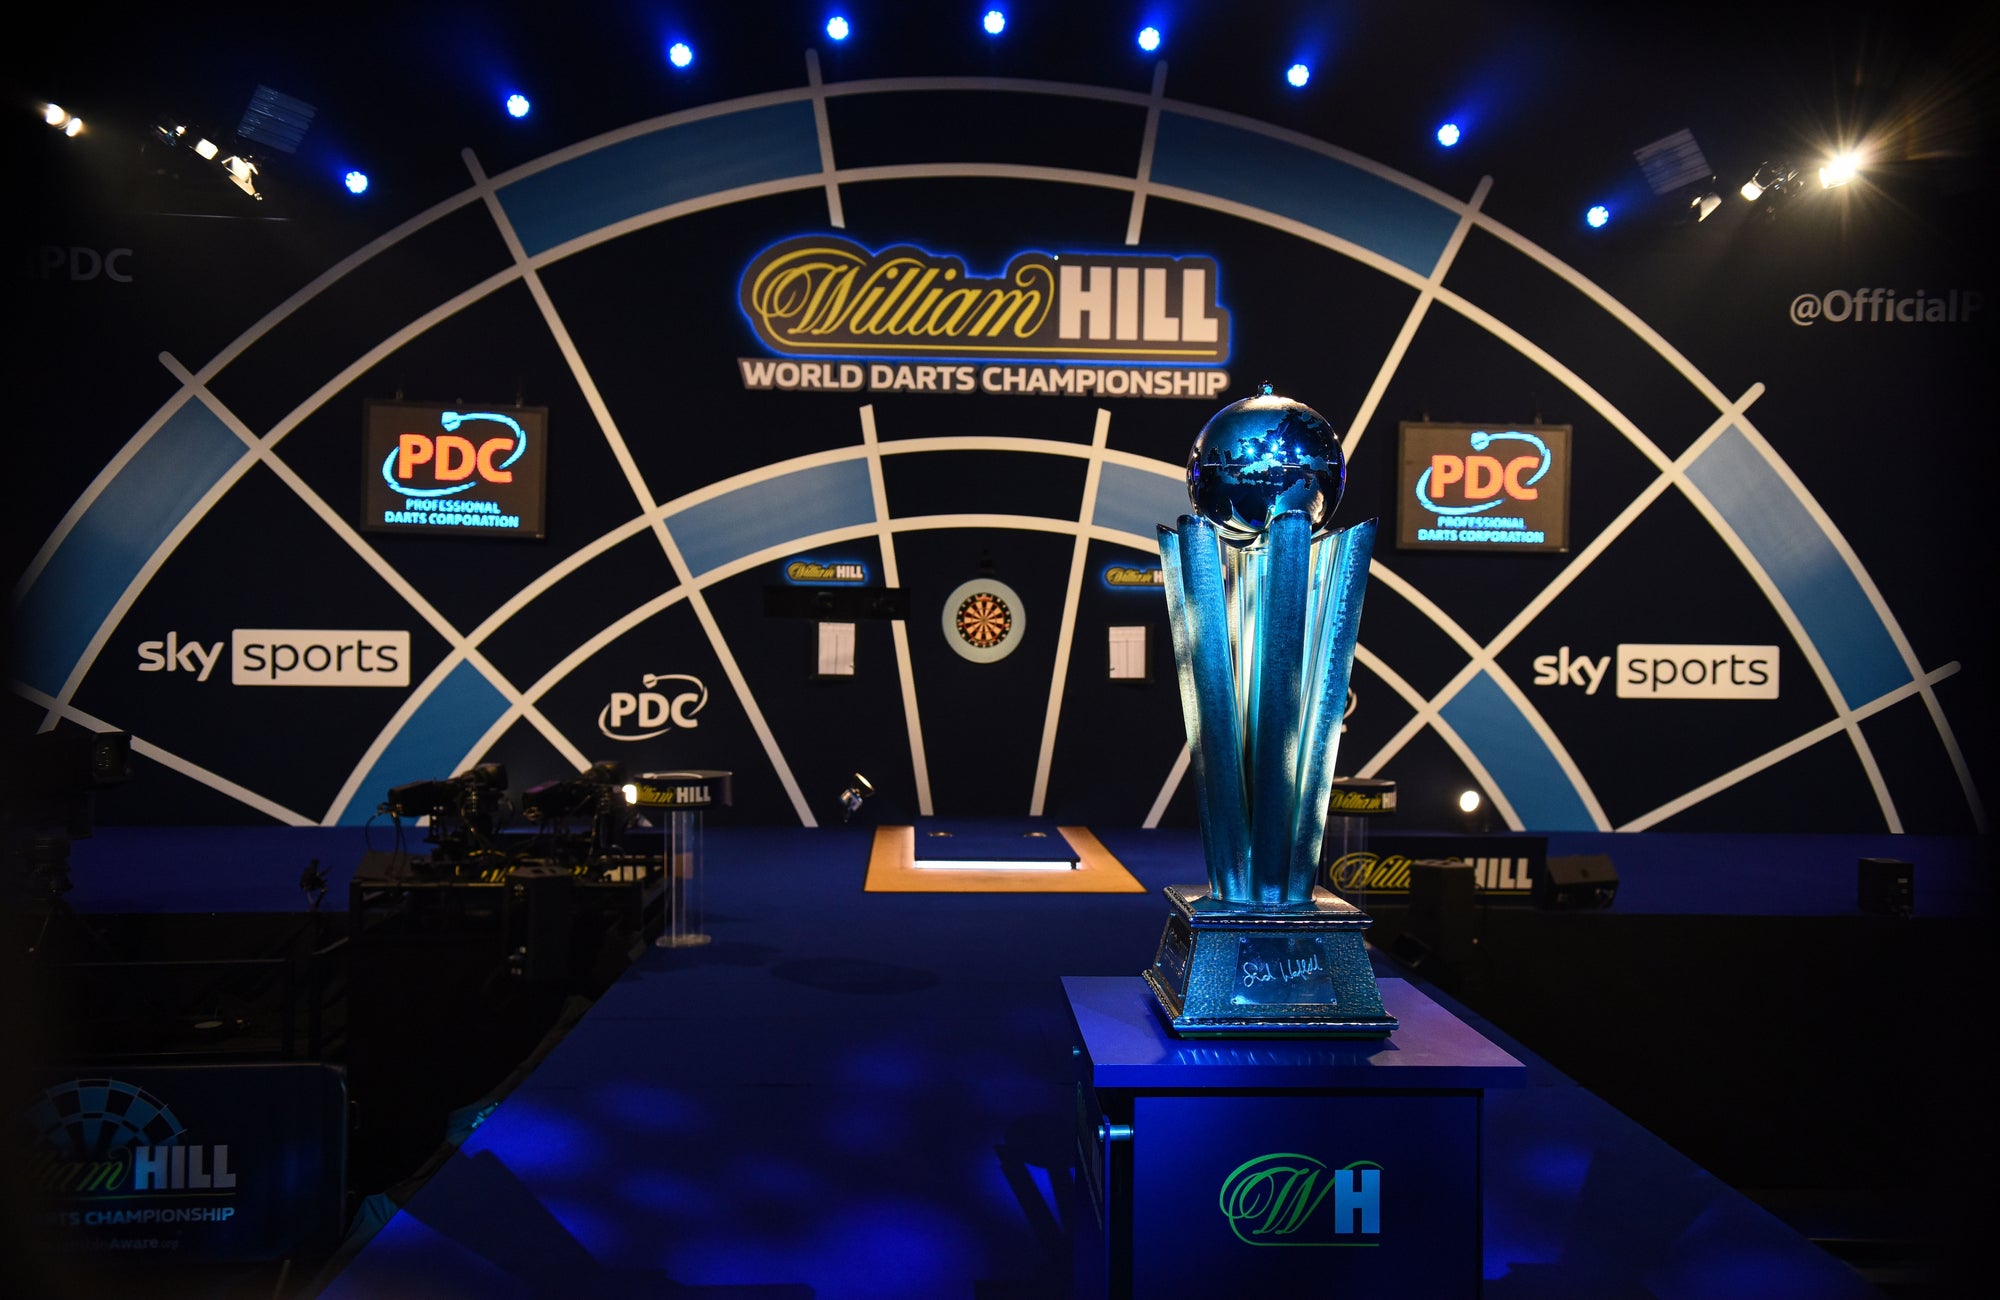 2021/22 William Hill World Darts Championship preview